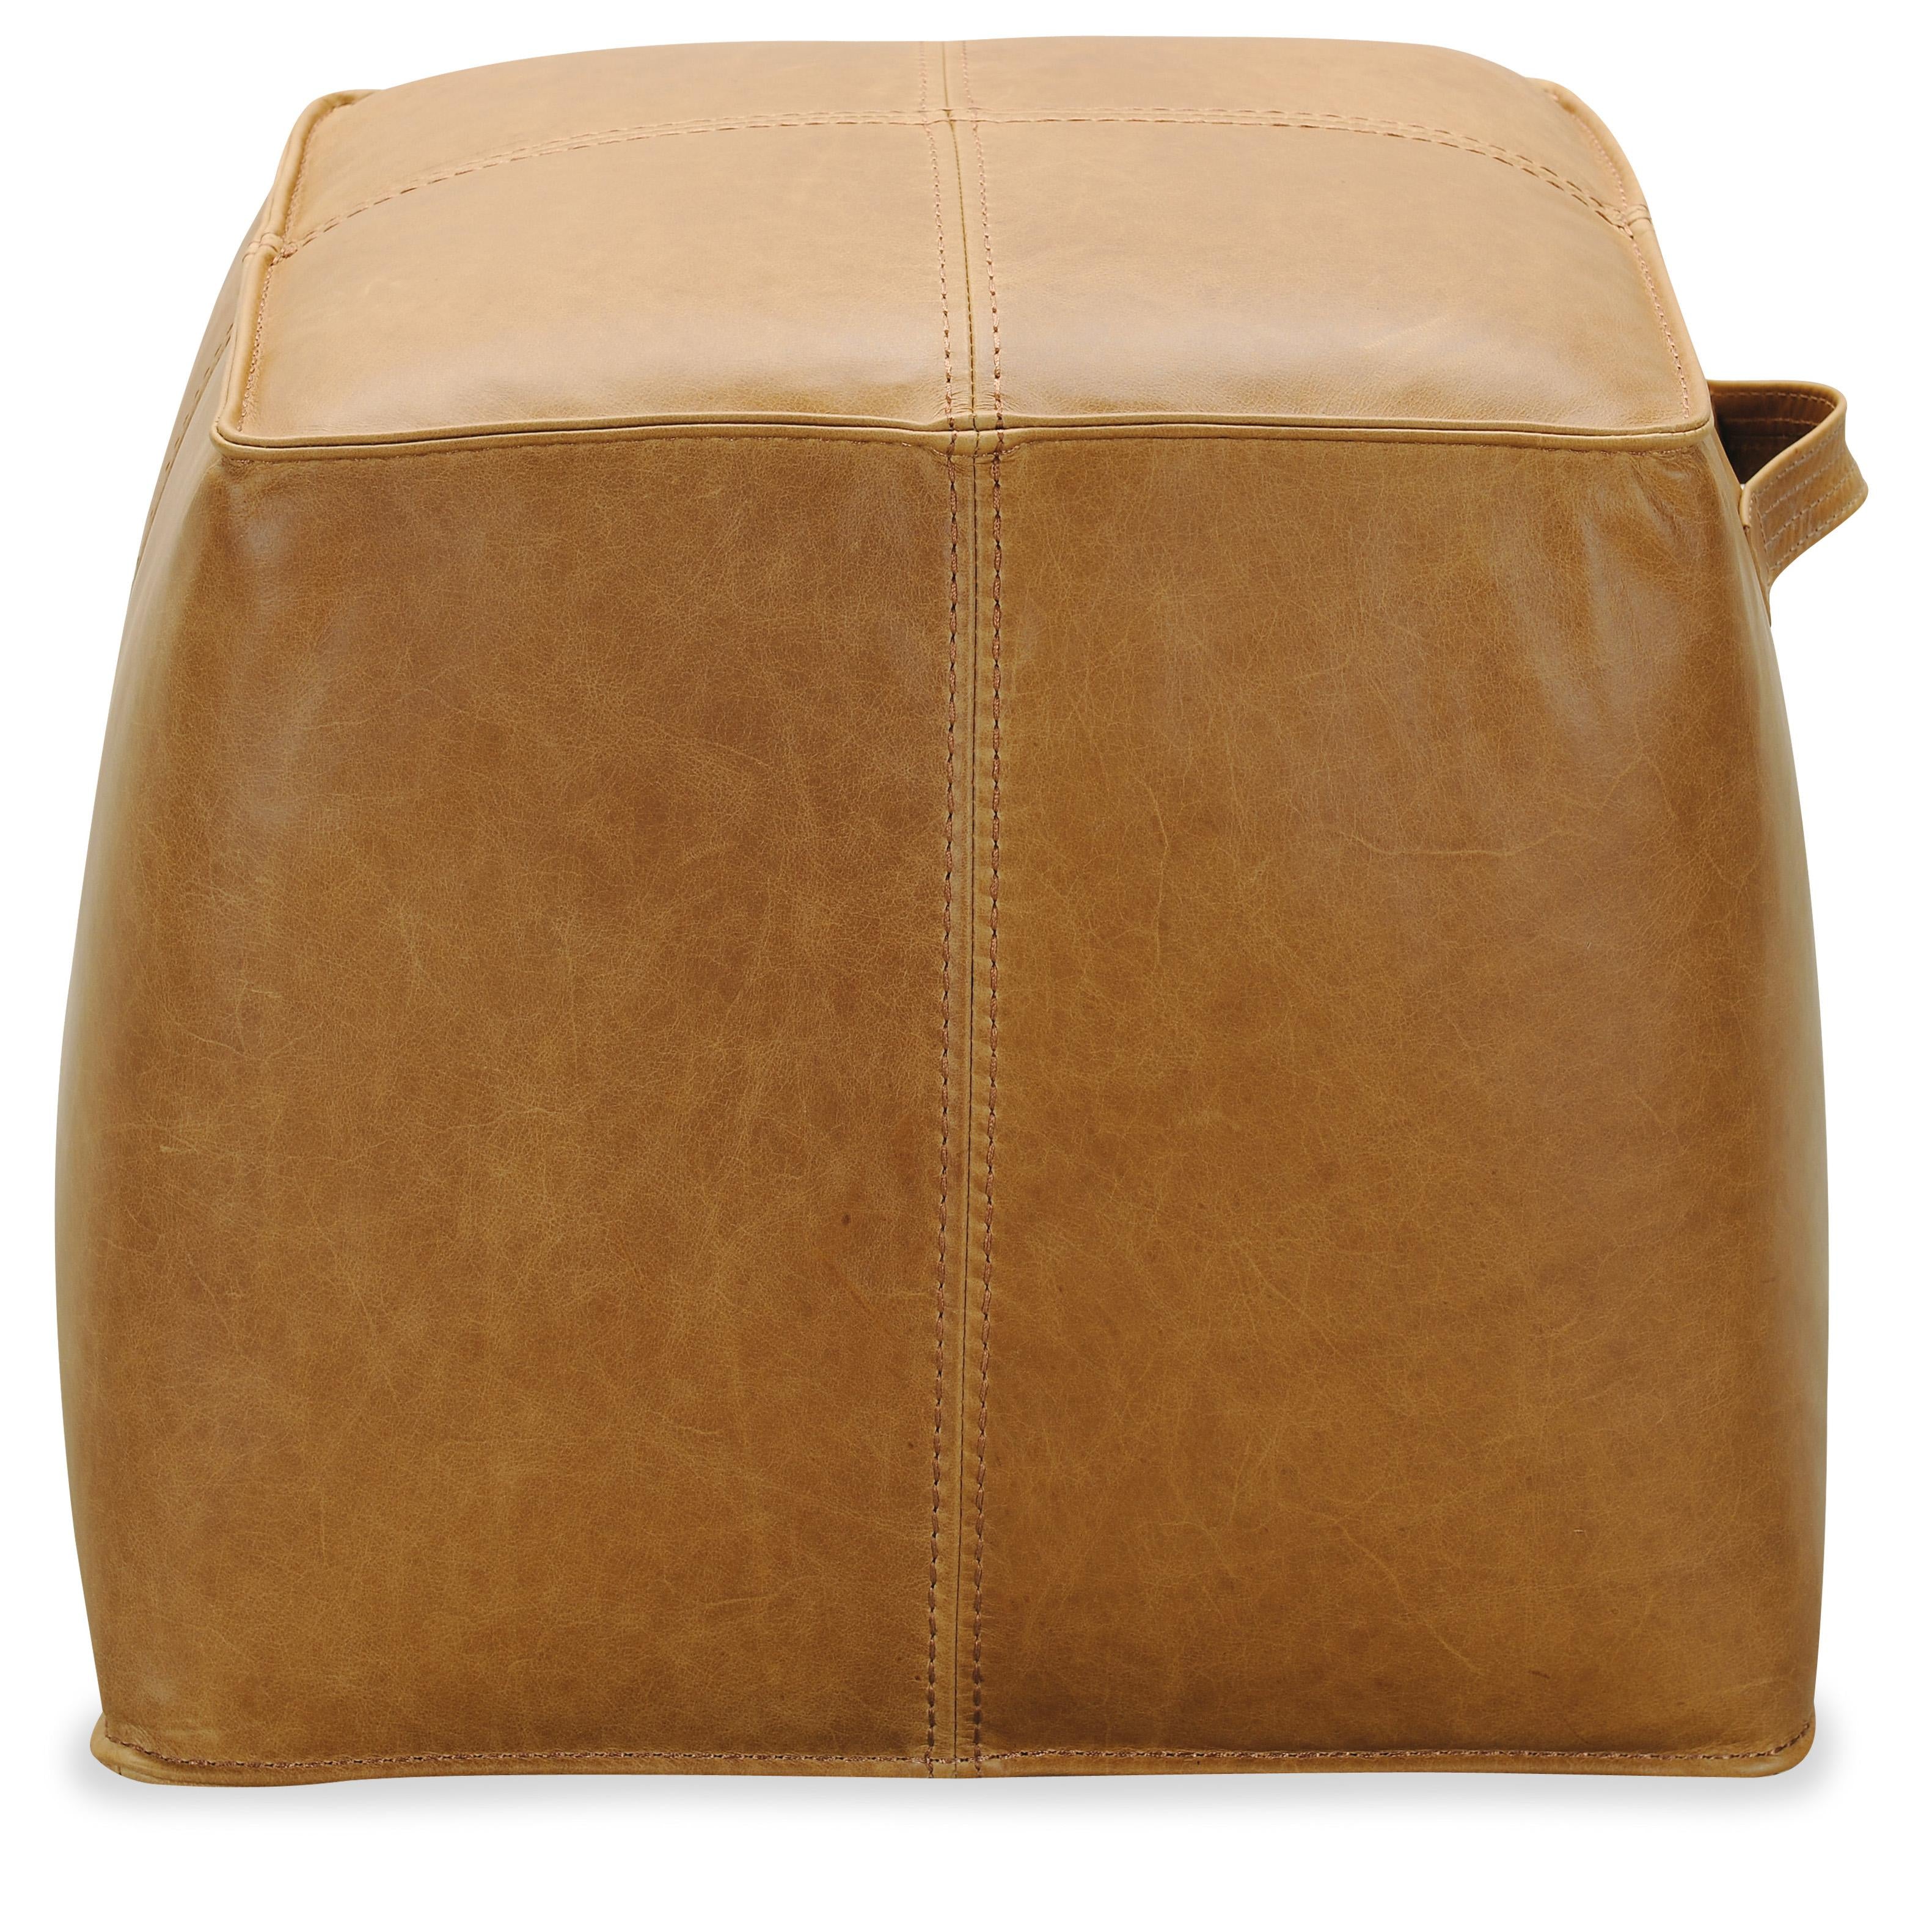 Dizzy Small Leather Ottoman - CO478-086